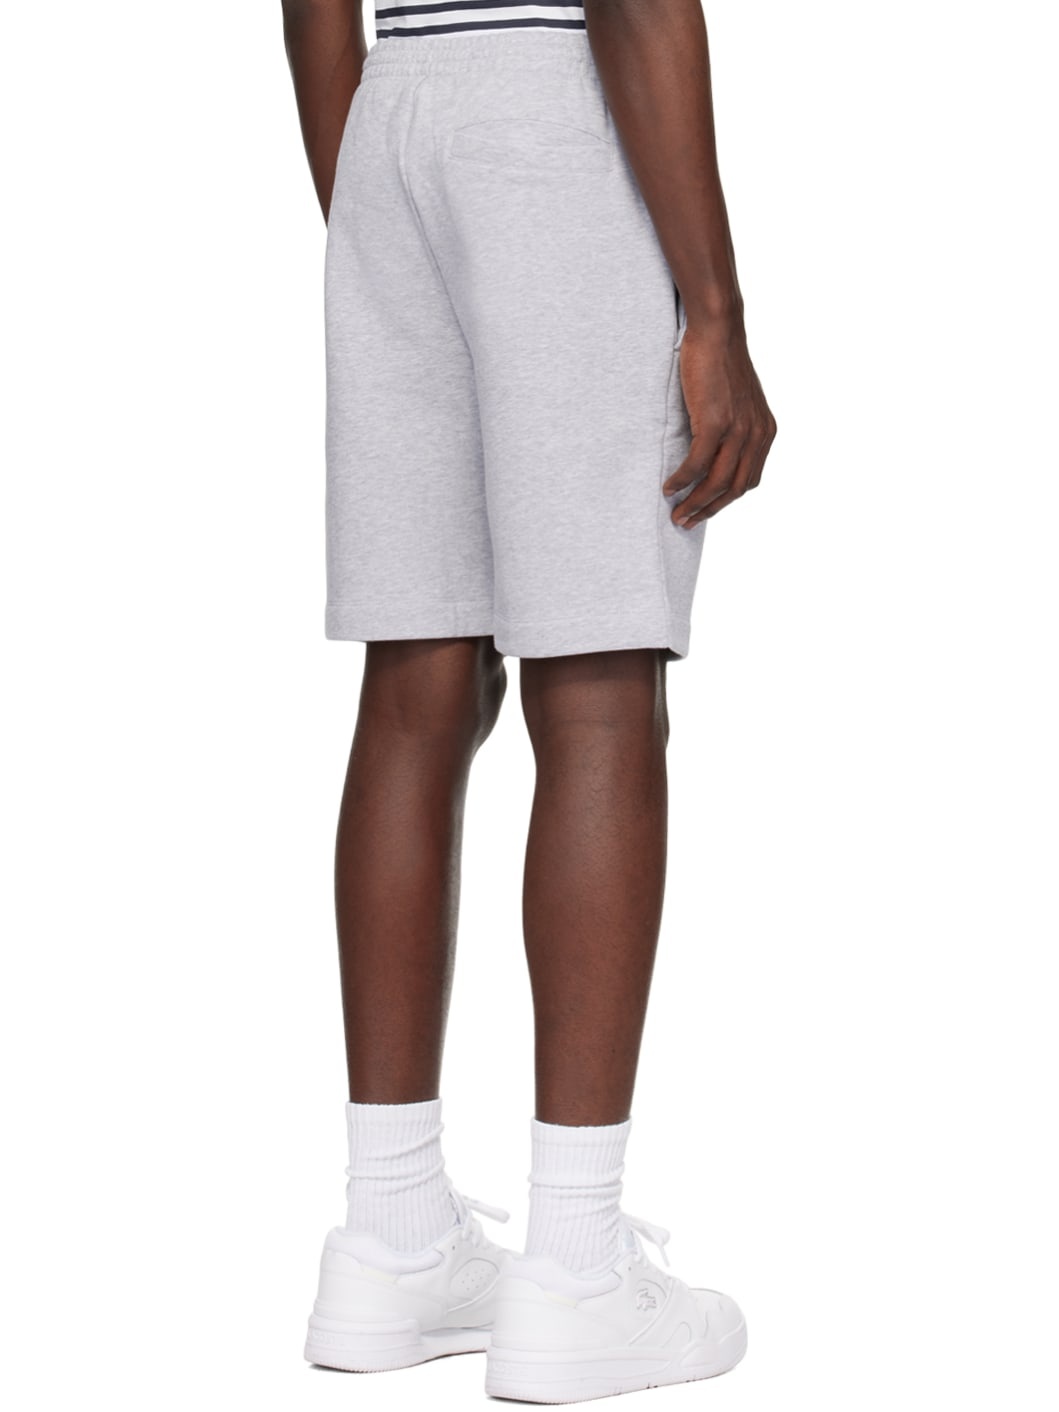 Gray Jogger Shorts - 3